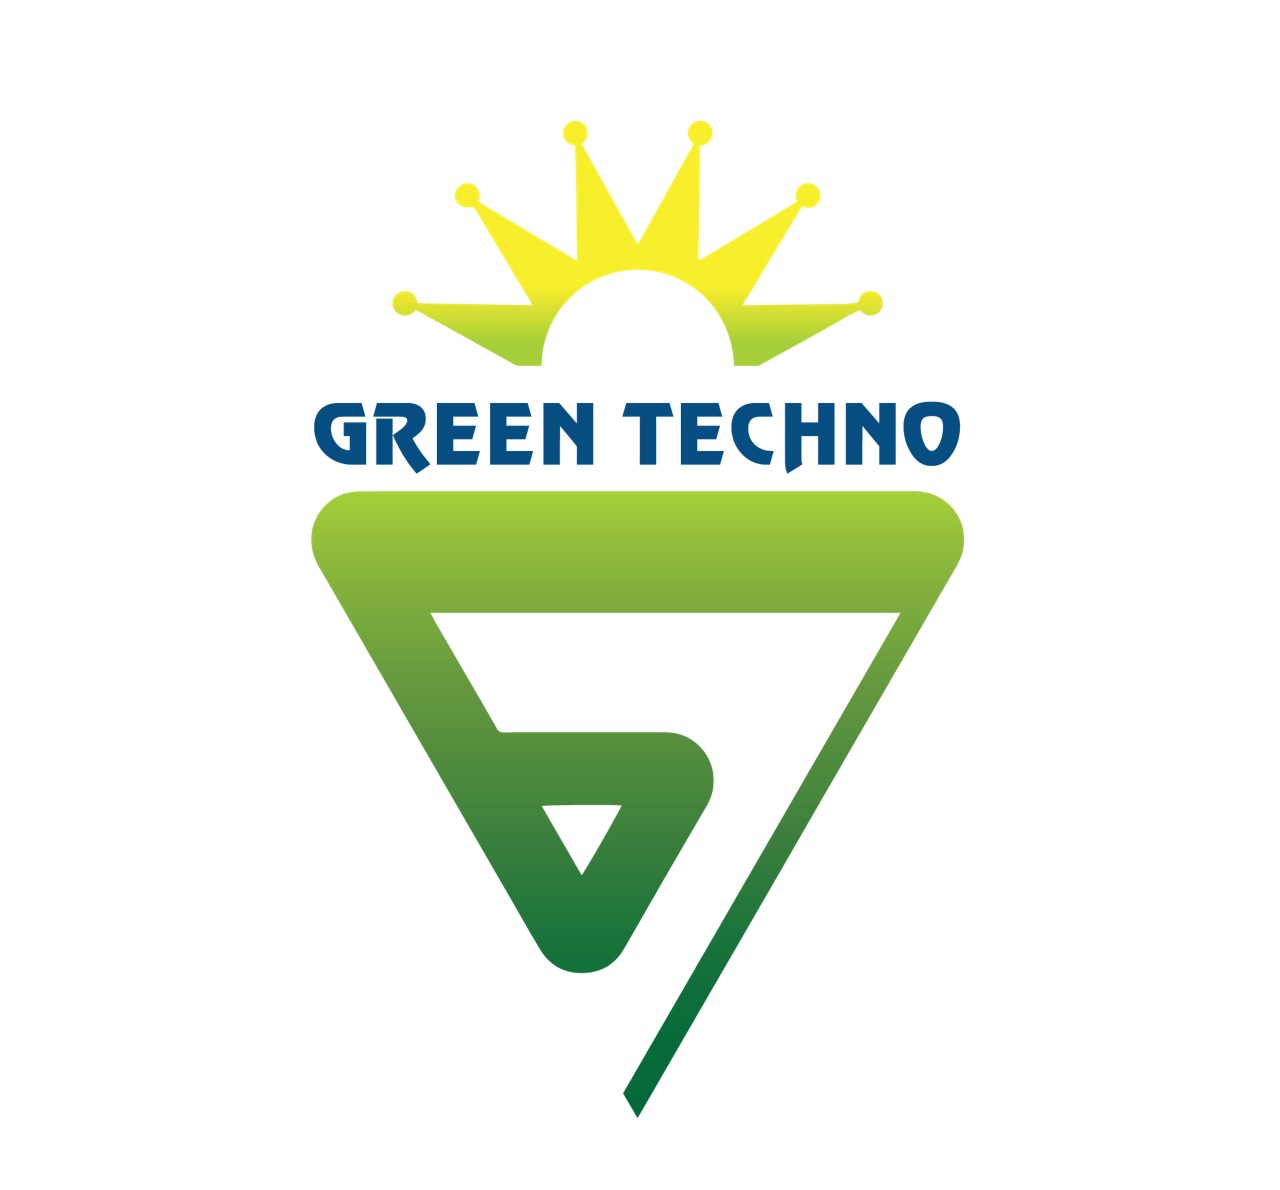 GREEN TECHNO – Go Green. Think Alternatives!